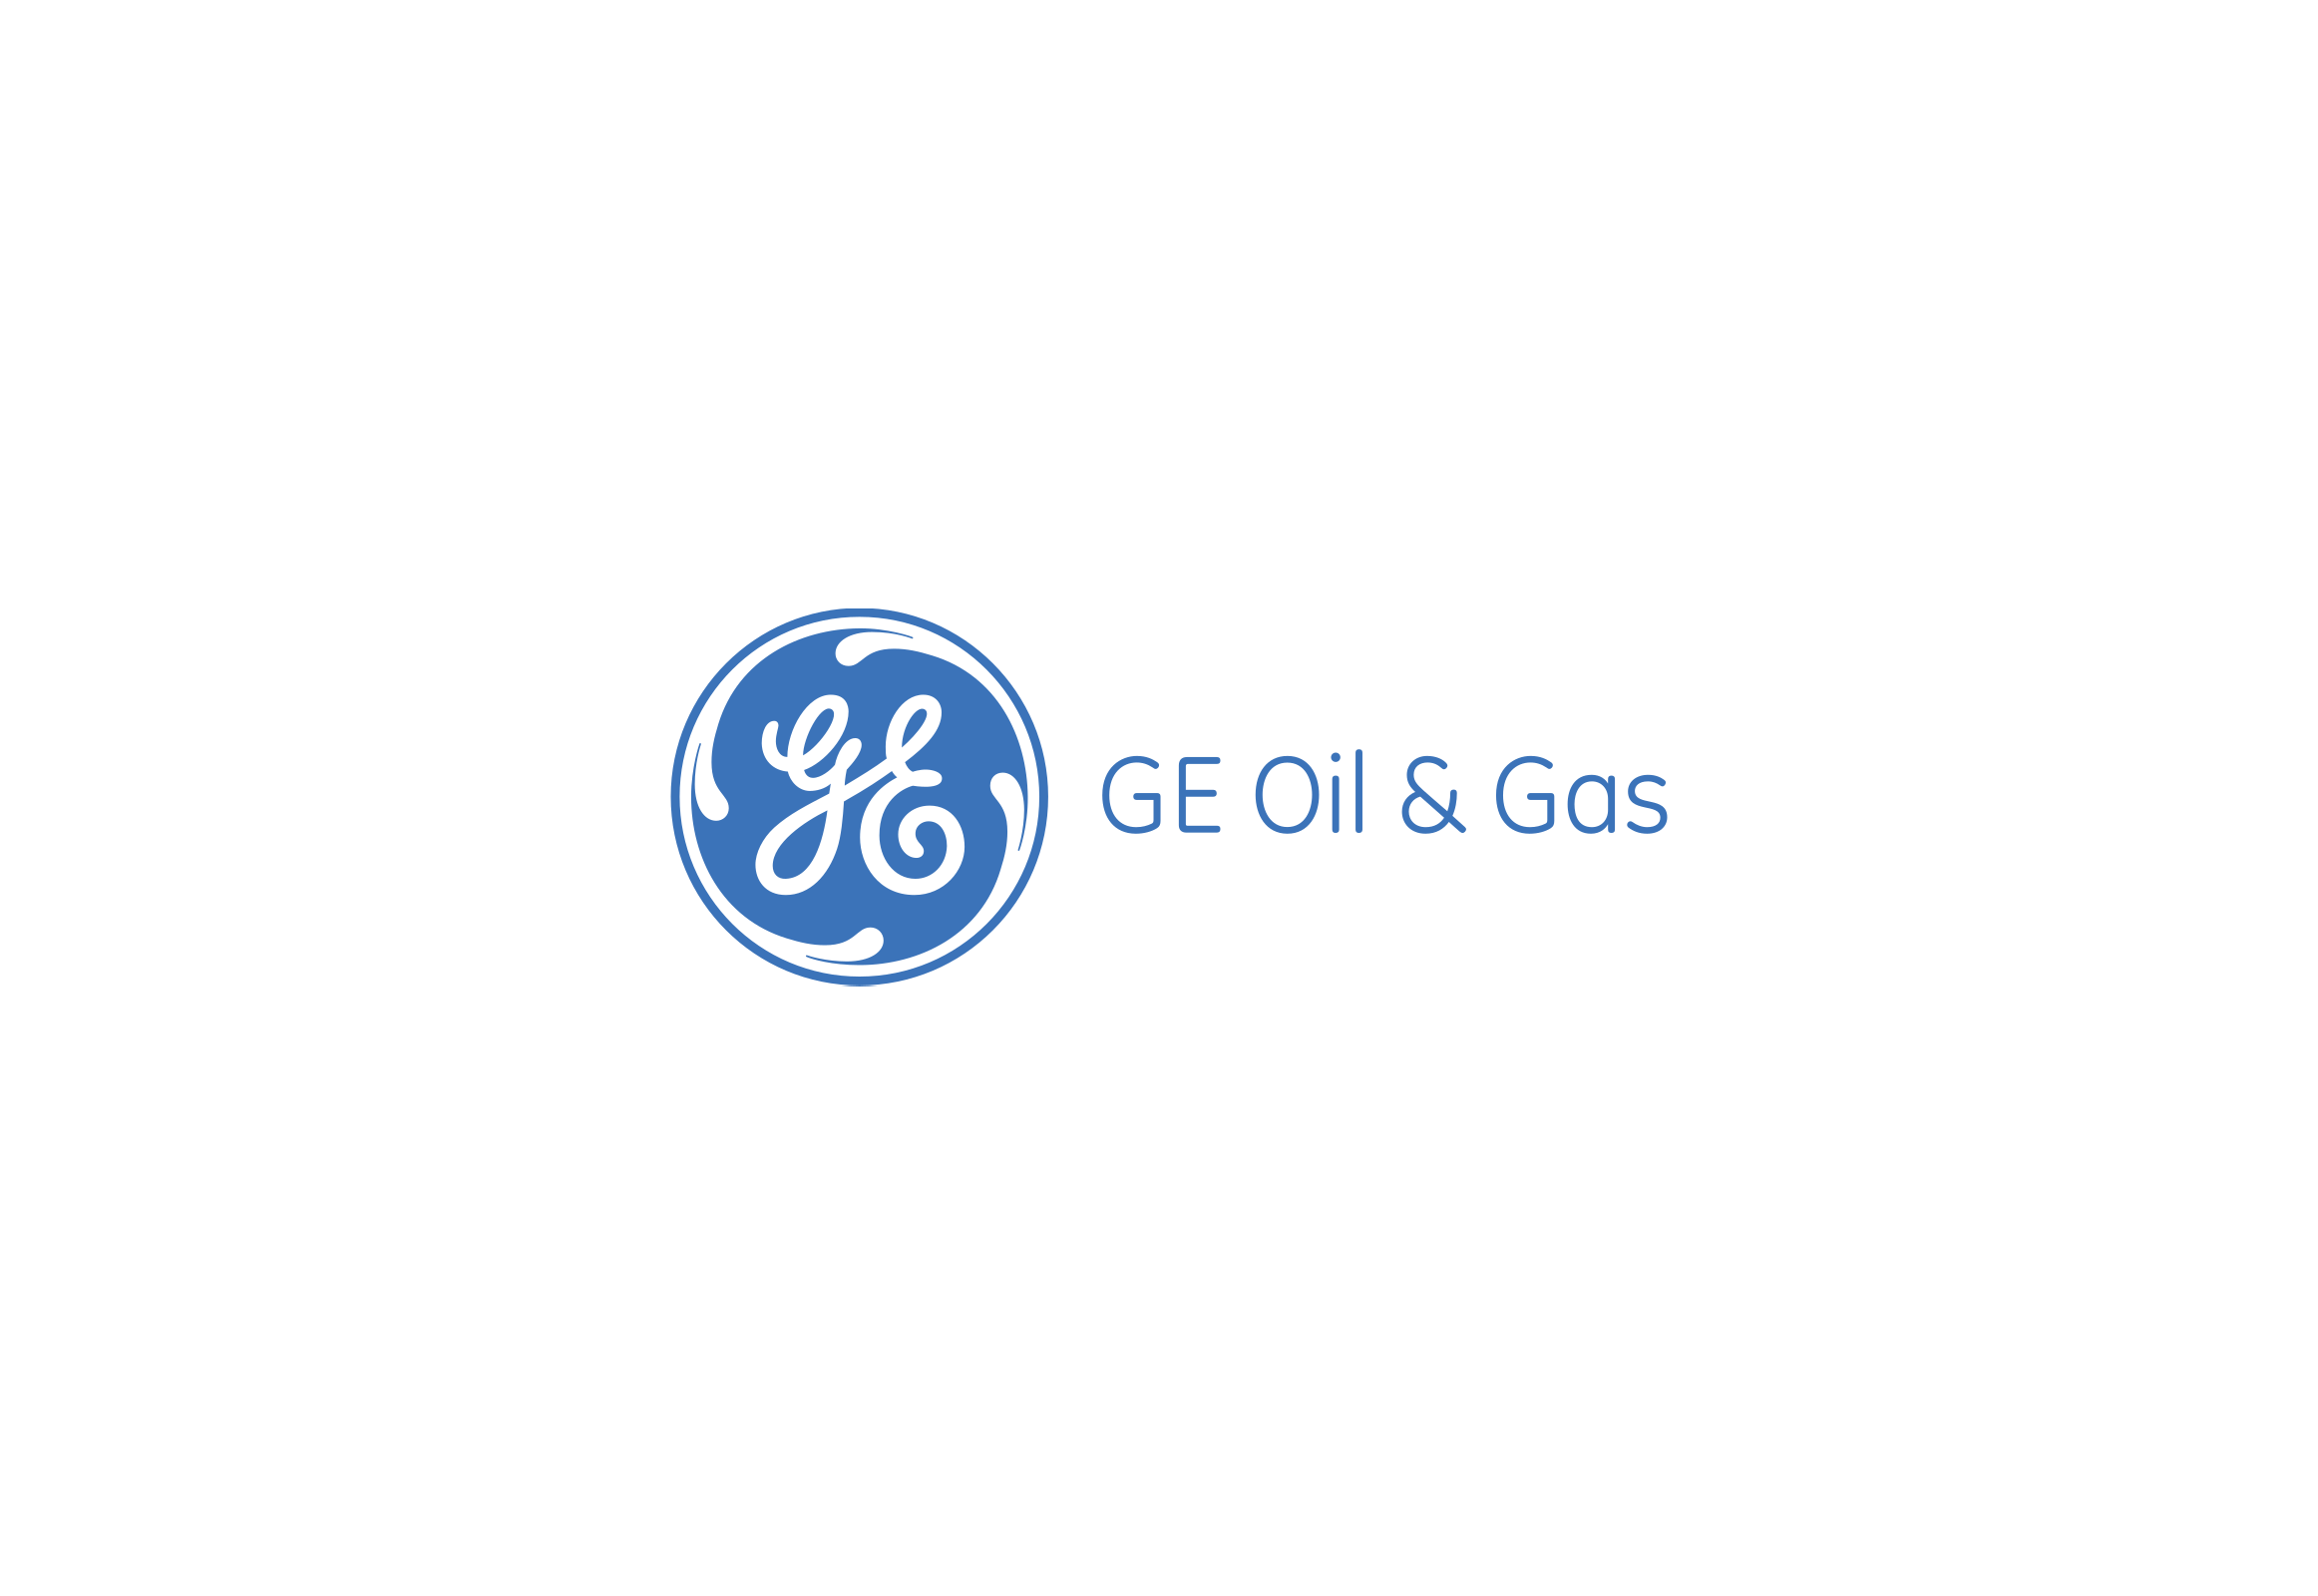 GE Company Logo - GE Oil & Gas logo | Dwglogo